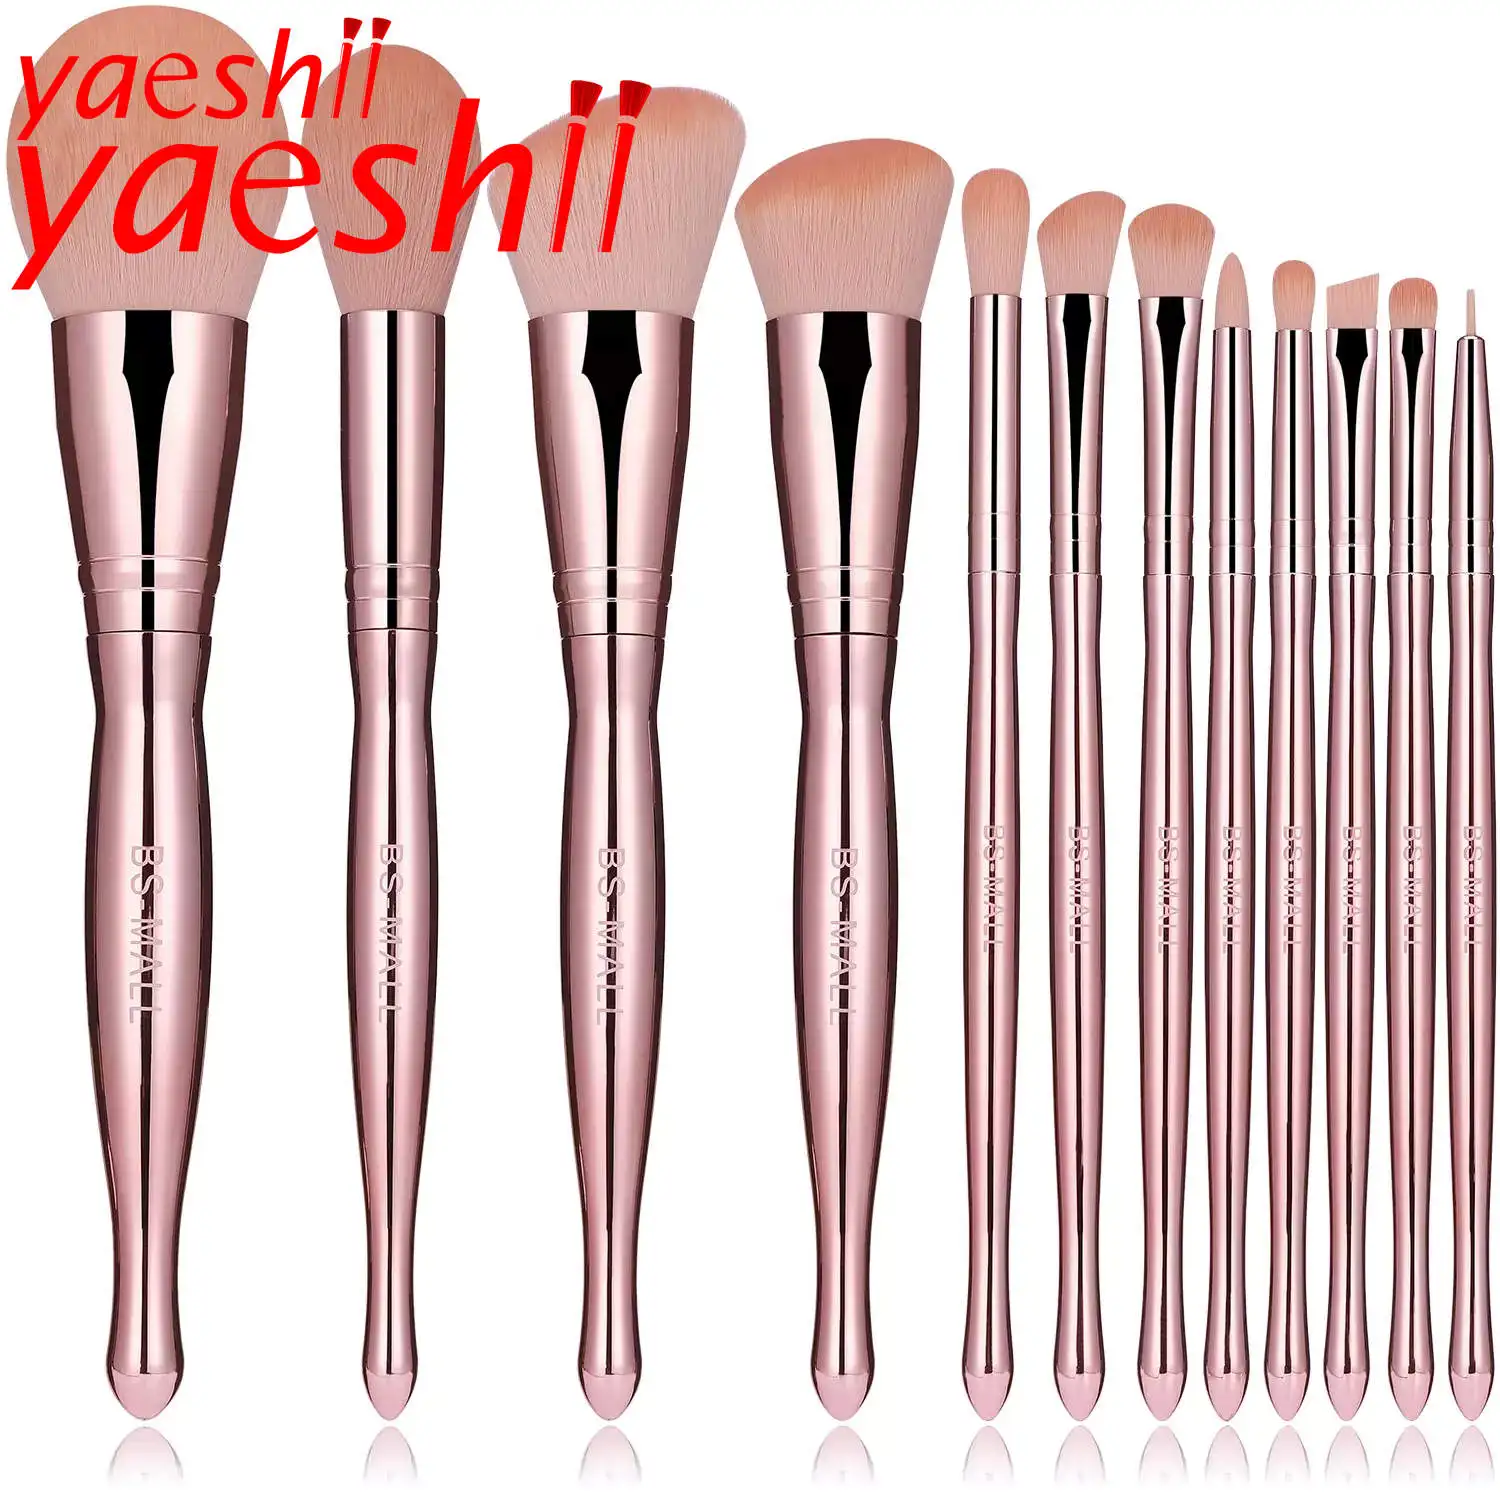 

Yaeshii professional brochas para maquillaje pink vegan private label brochas de maquillaje pinceaux maquillage makeup brush set